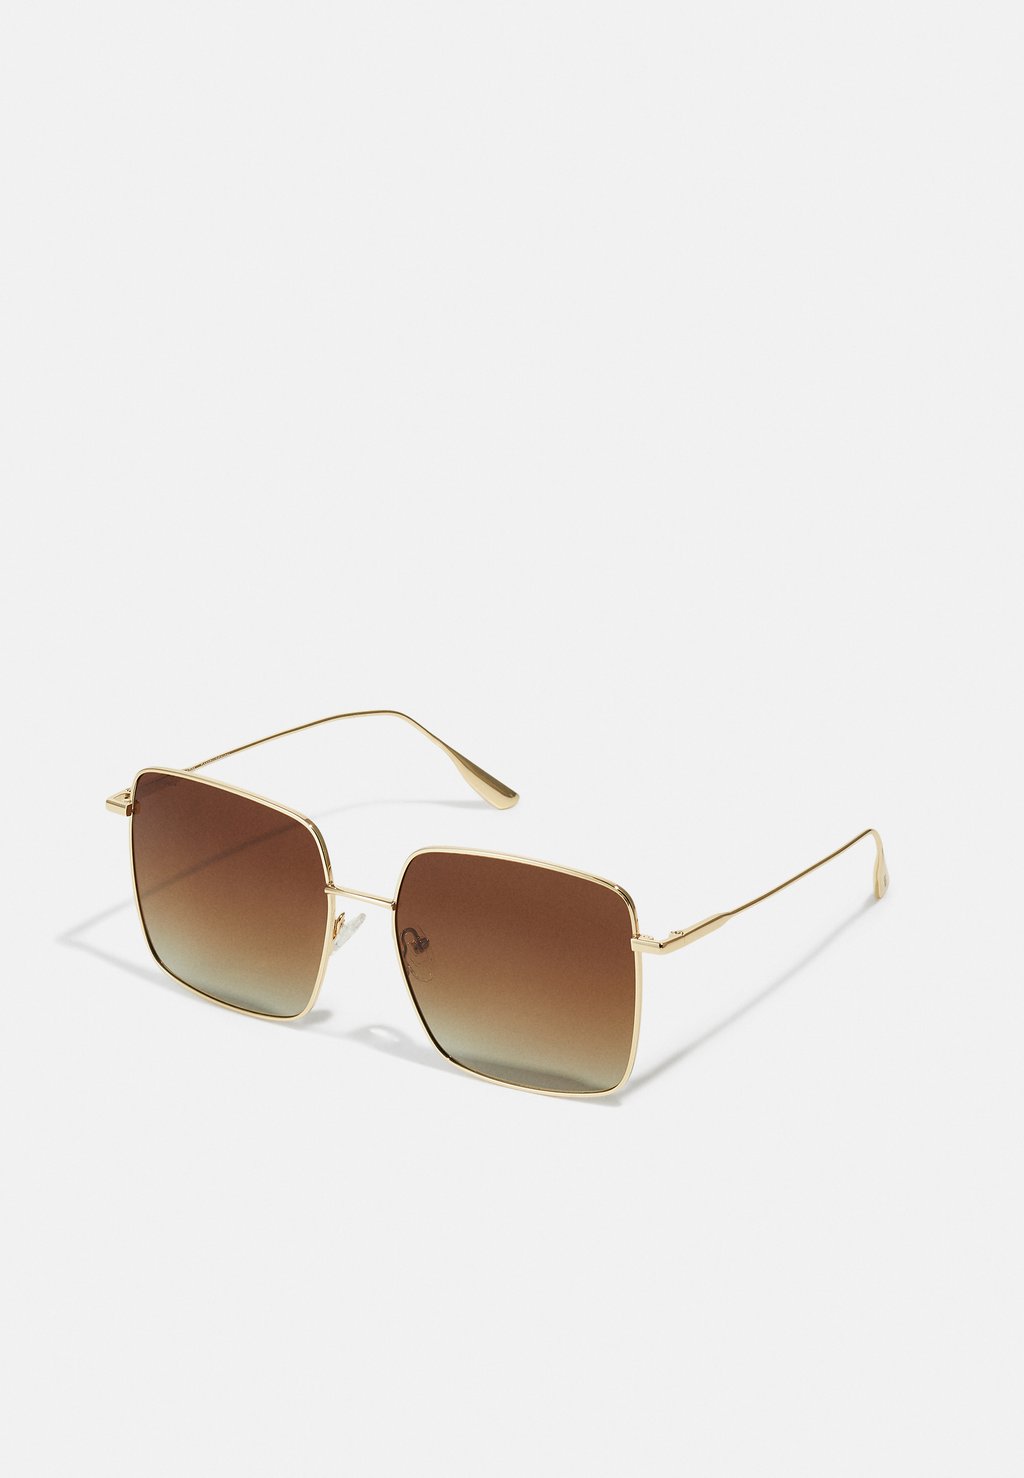 Солнцезащитные очки Jonan Sunglasses Pilgrim, цвет brown/gold-coloured ost – jackie brown coloured vinyl lp